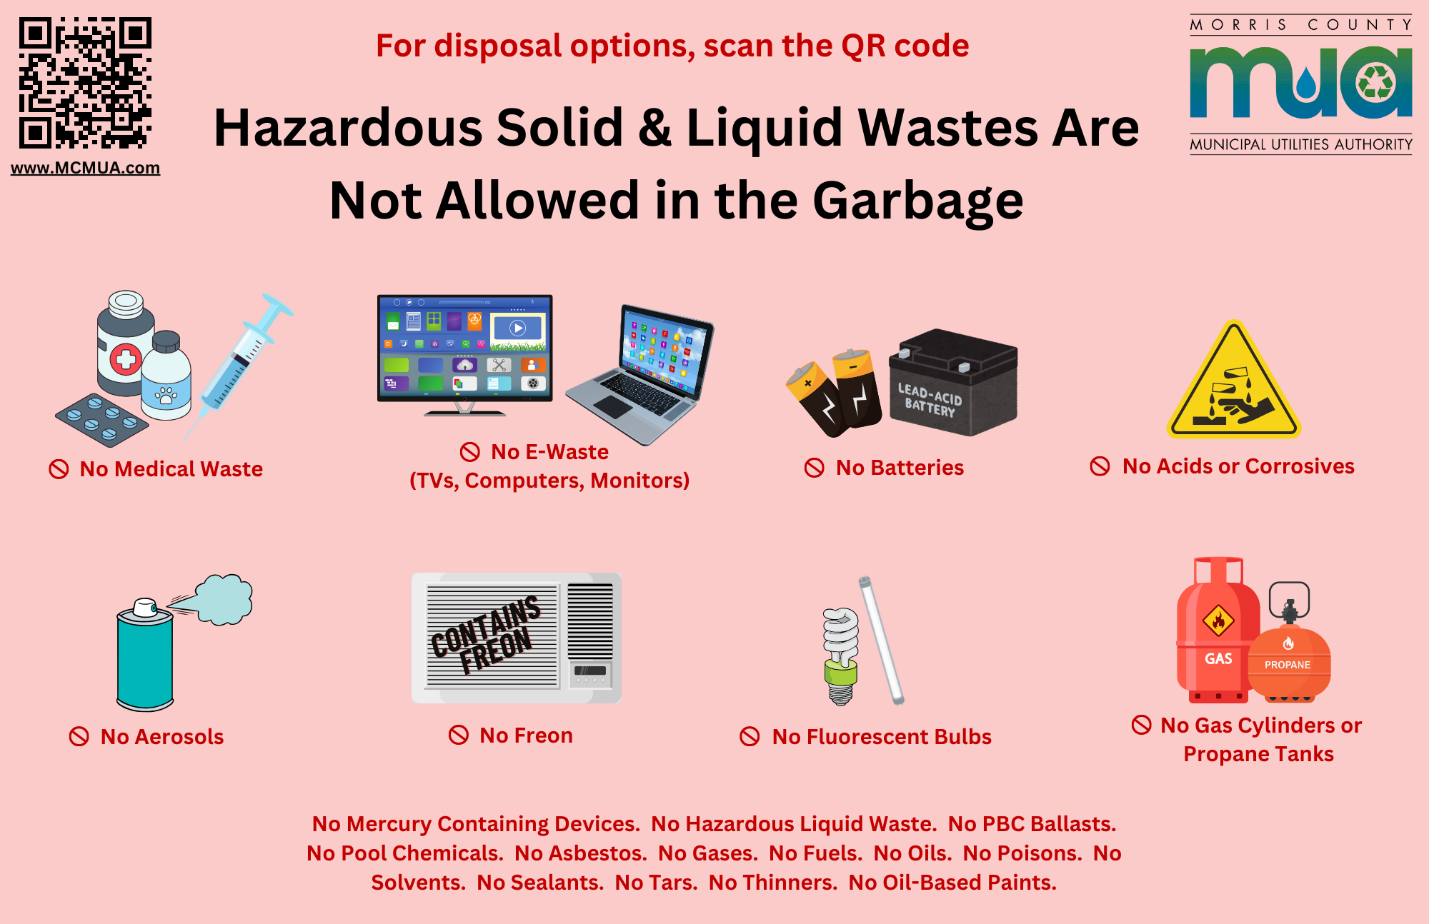 image of hazardous materials not allowed in dumpster